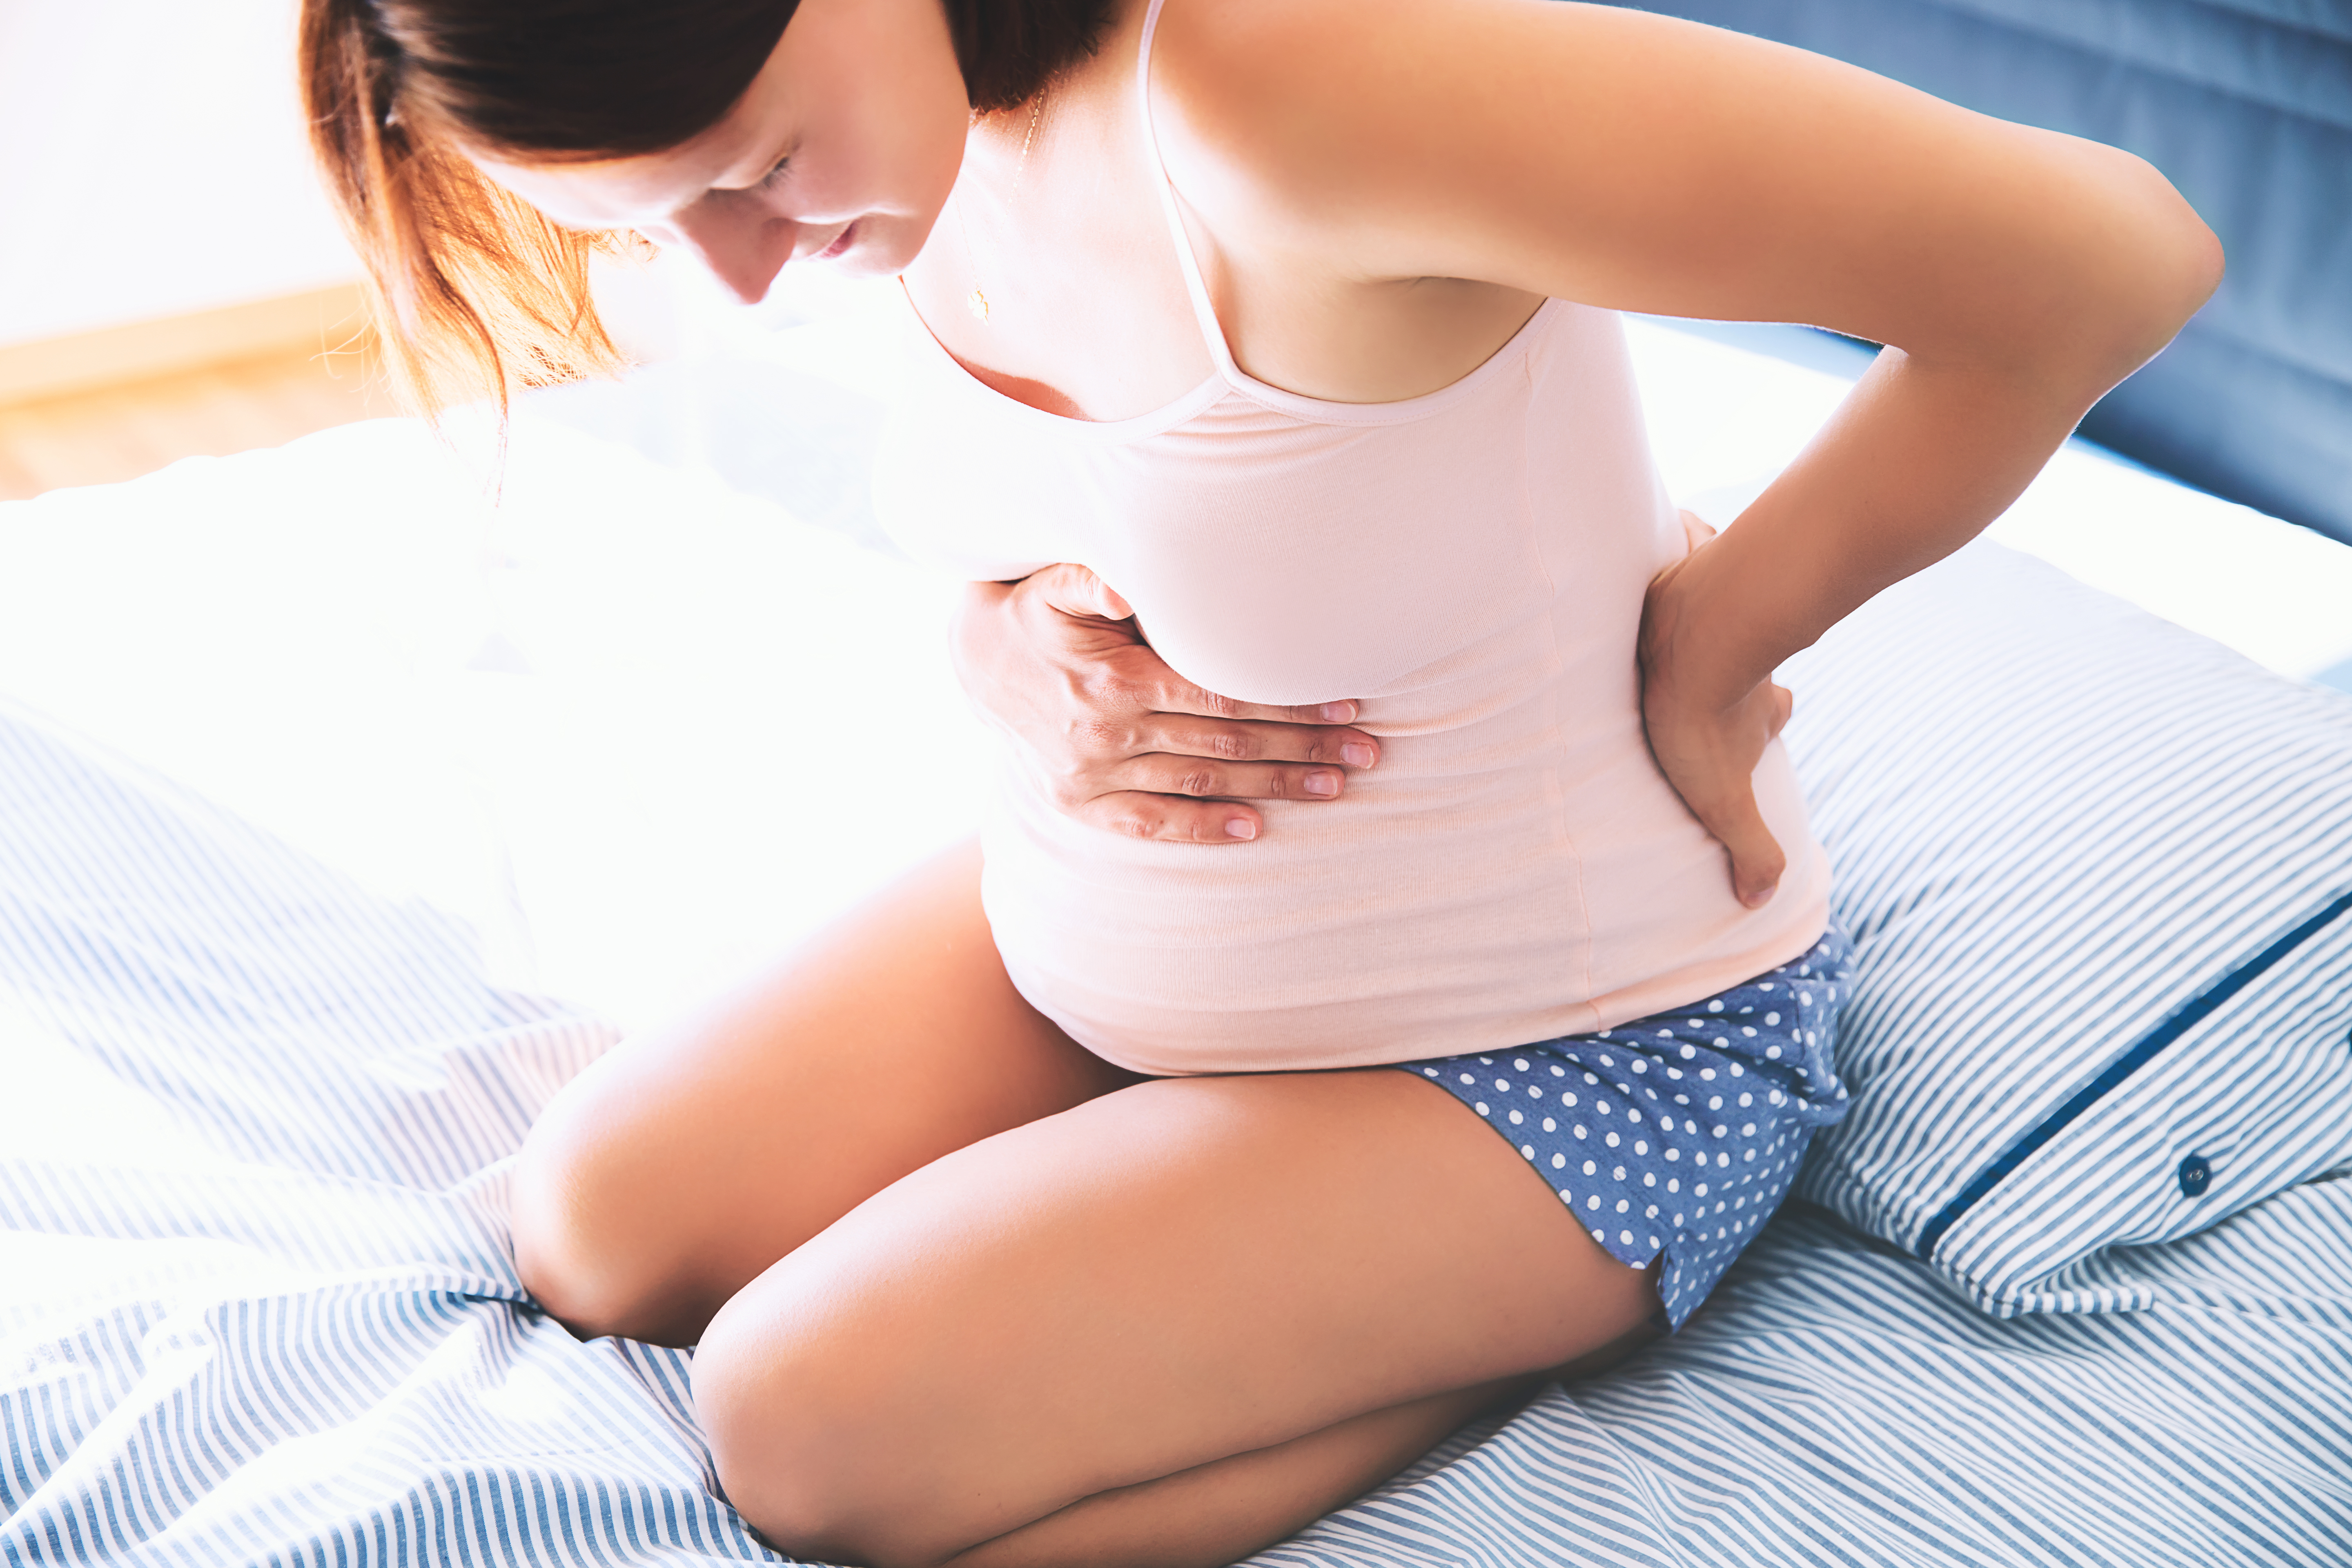 Une femme enceinte qui souffre | Source : Shutterstock